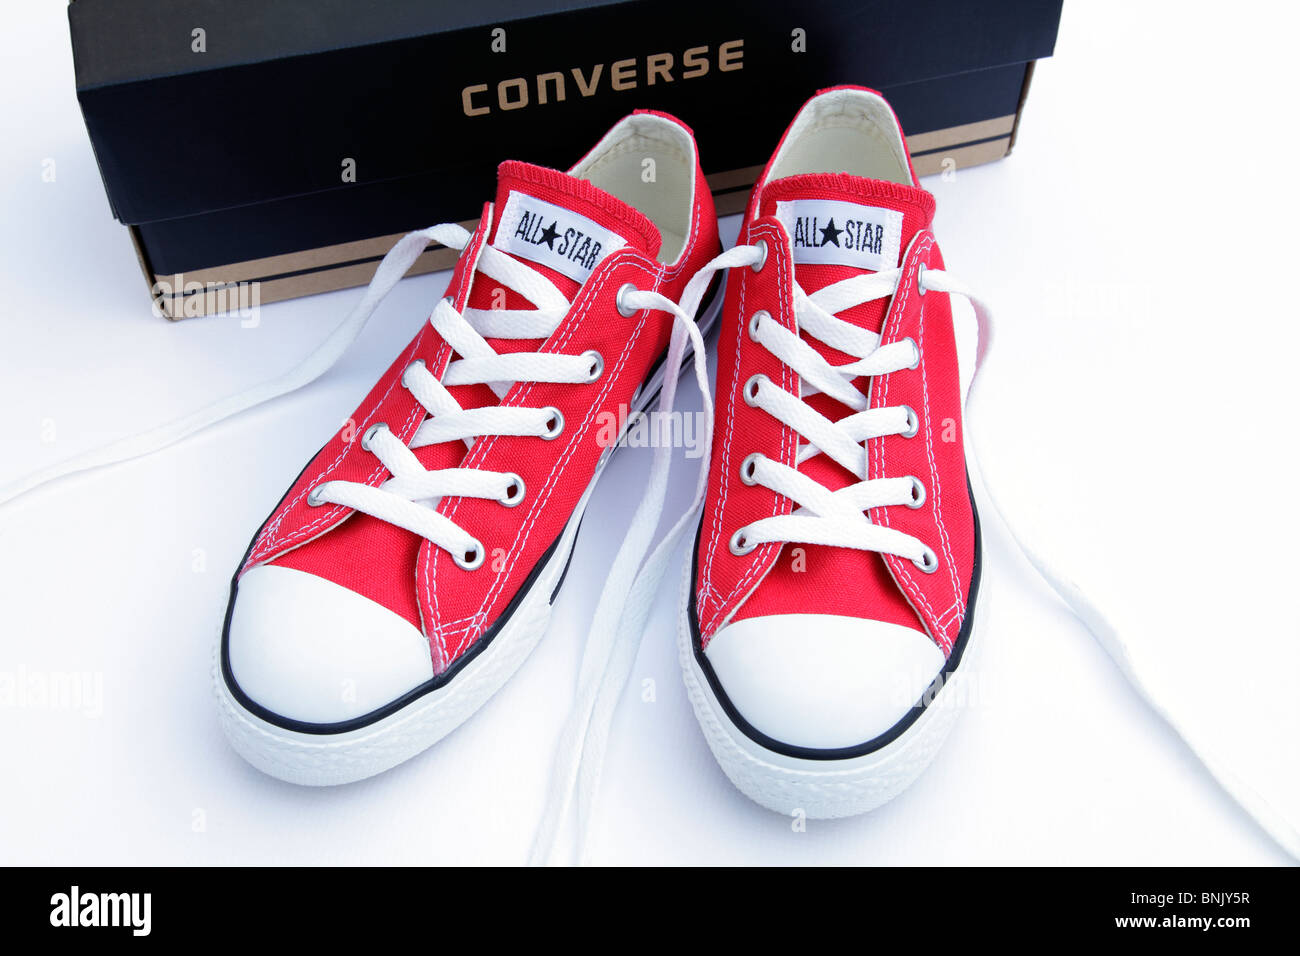 Rote converse schuhe -Fotos und -Bildmaterial in hoher Auflösung – Alamy